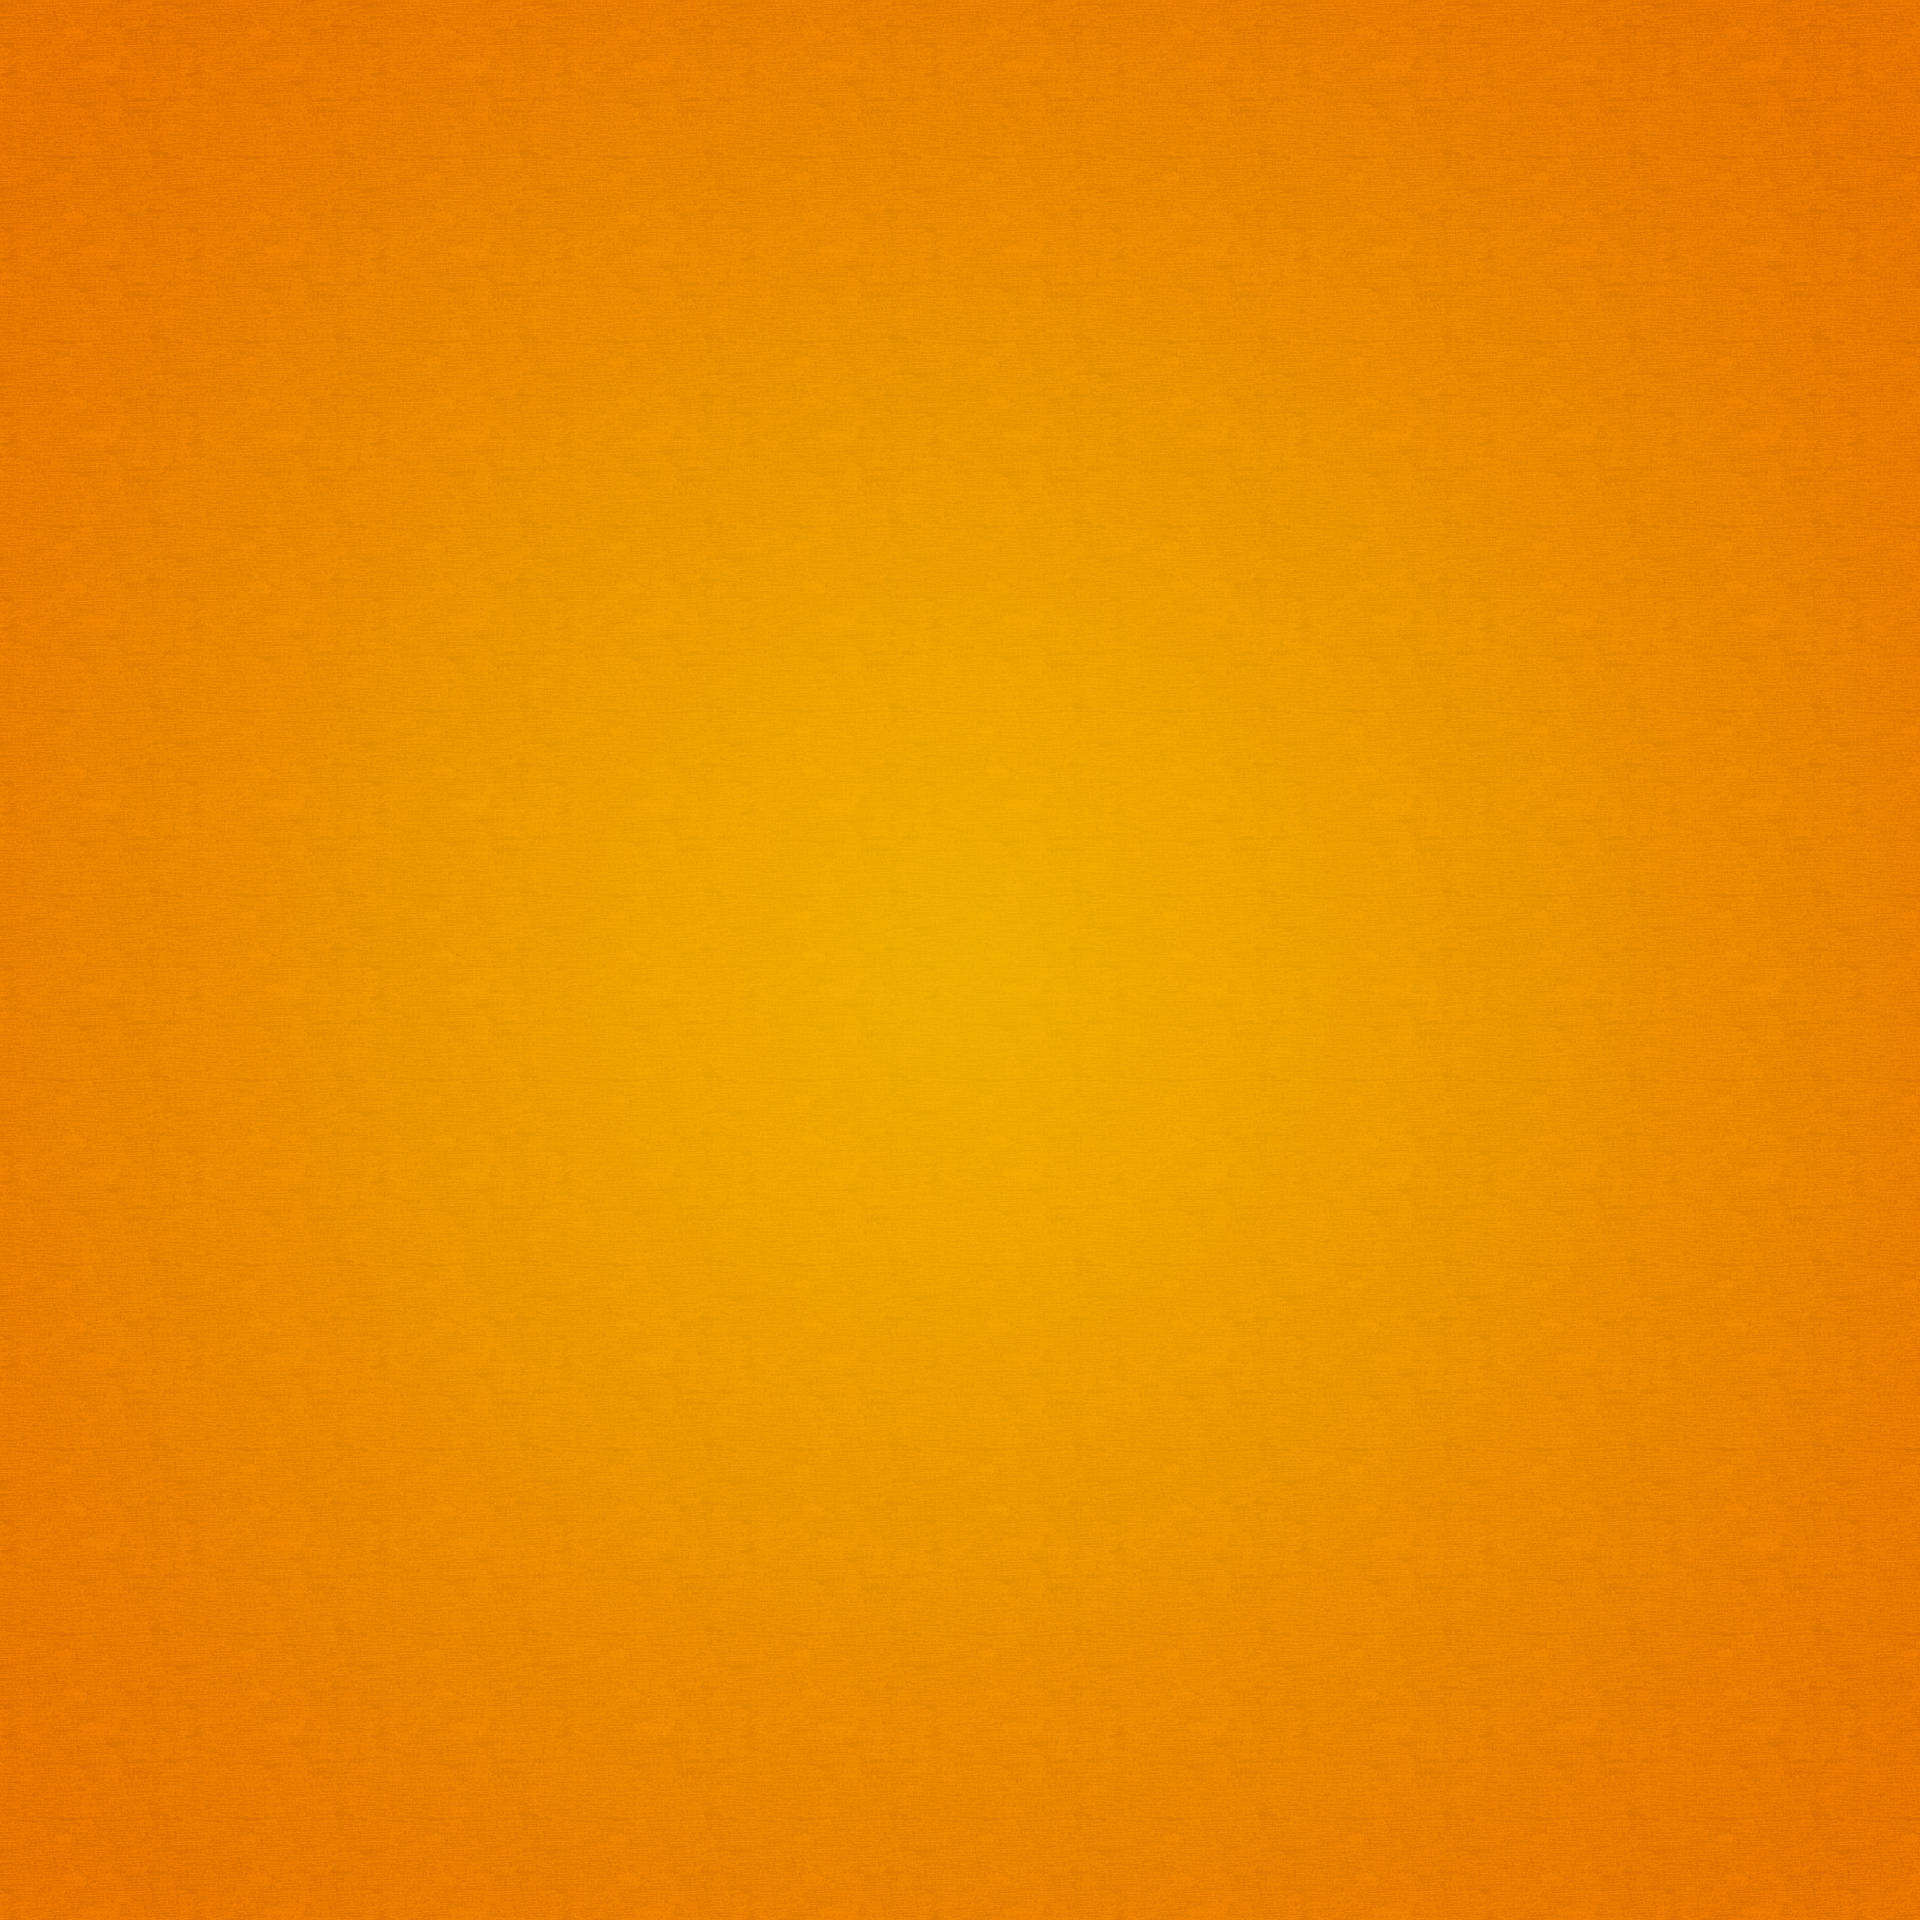 5200X5200 Orange Wallpaper and Background